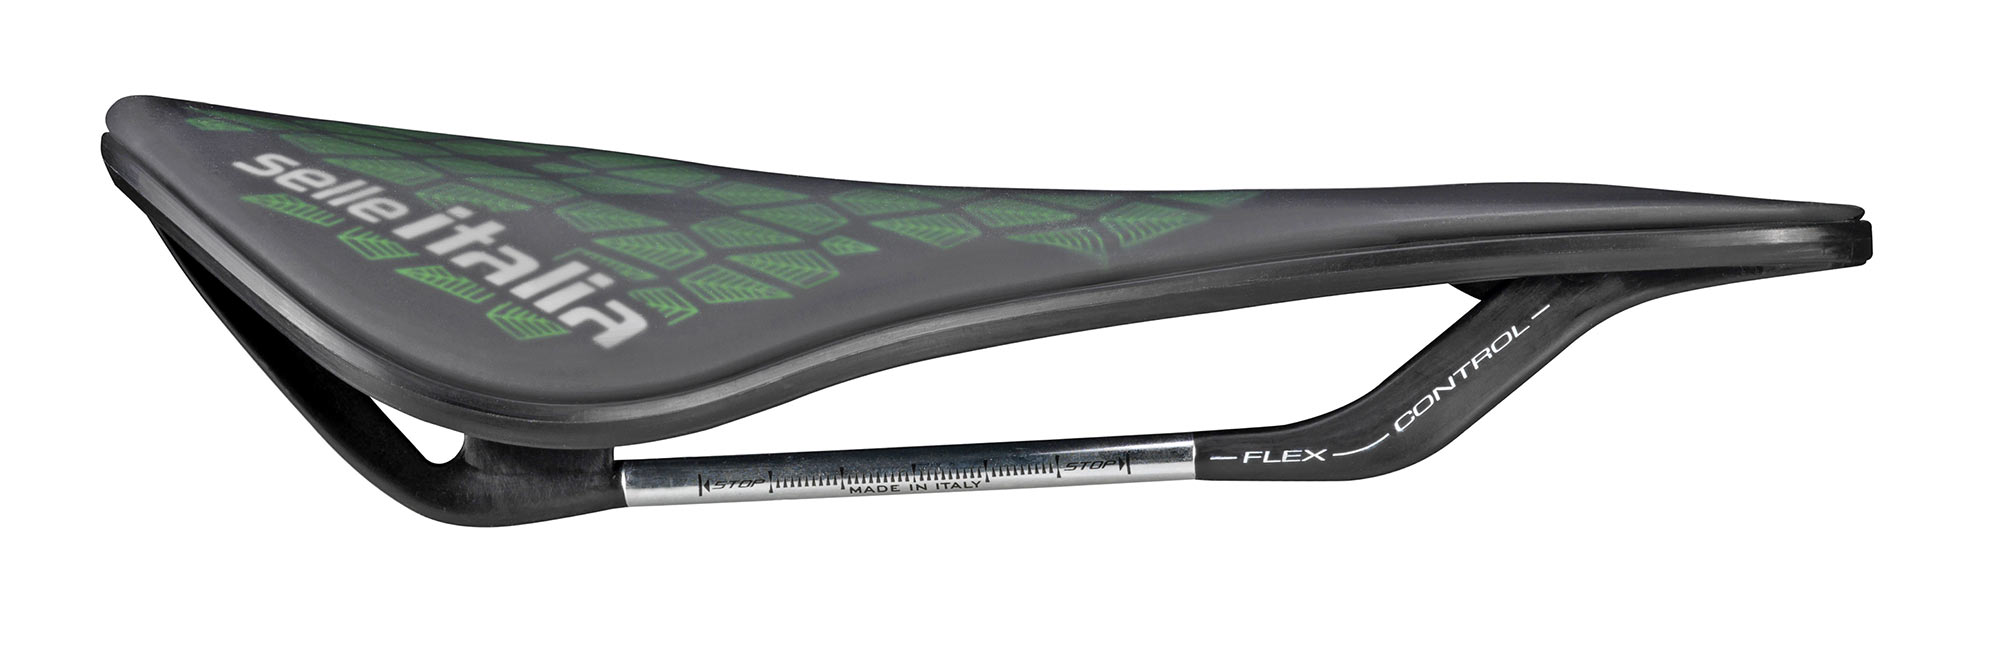 Selle-Italia-Model-X-Leaf-affordable-eco-friendly-sustainable-road-bike-saddle_side-profile.jpg